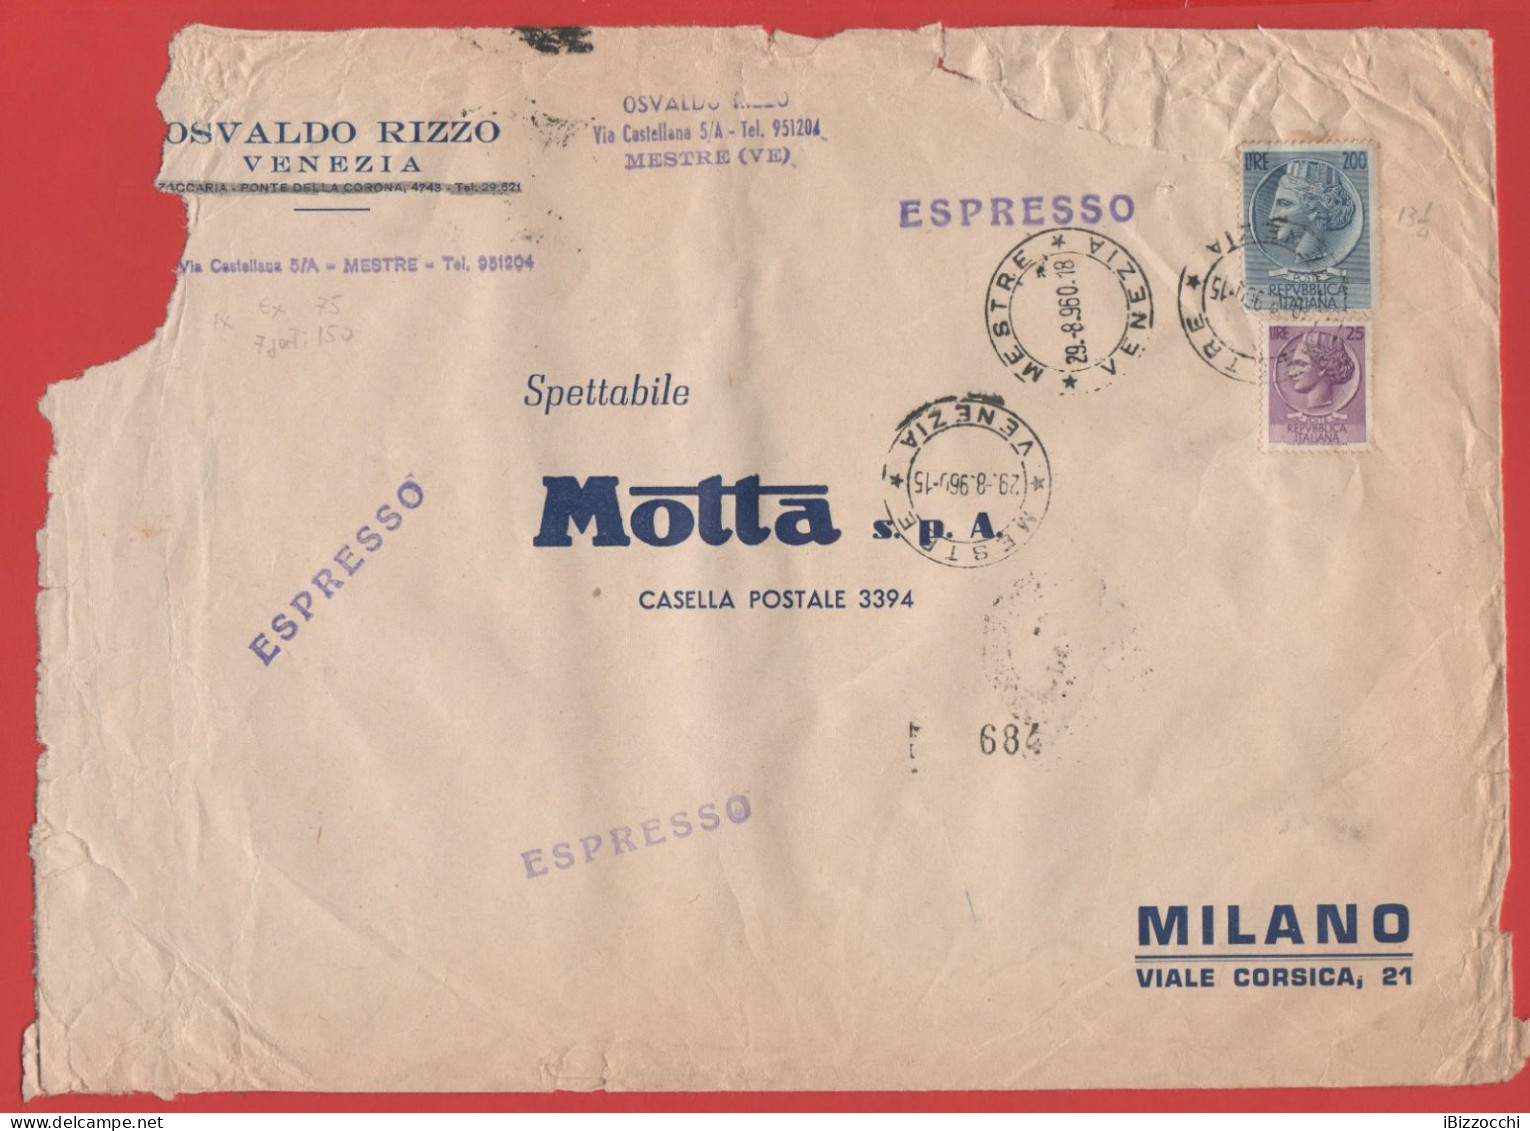 ITALIA - Storia Postale Repubblica - 1960 - 200 Antica Moneta Siracusana + 25 Antica Moneta Siracusana - Espresso - MOTT - 1946-60: Storia Postale